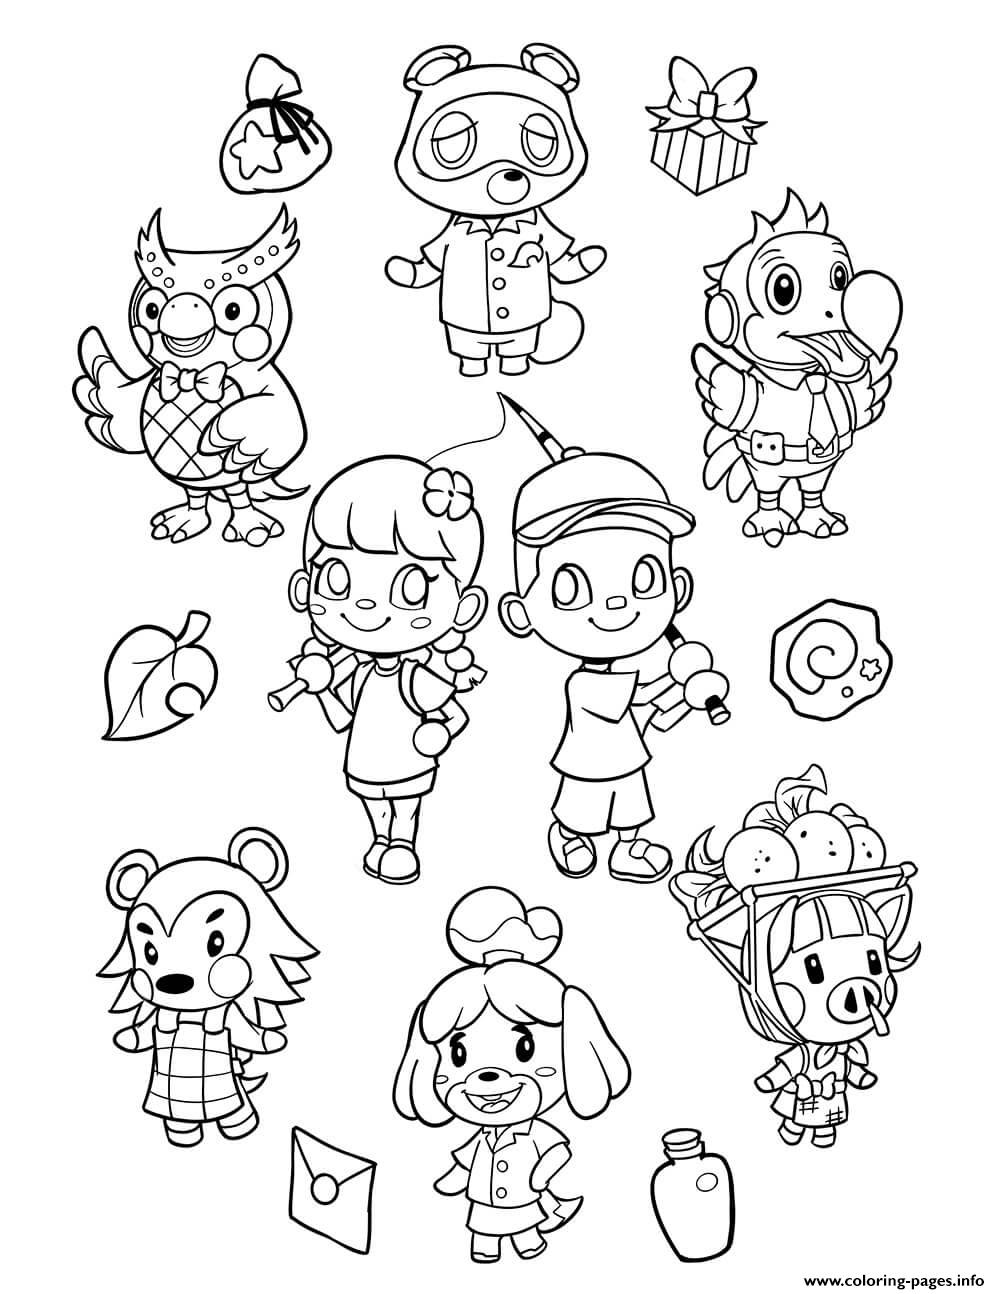 Animal Crossing New Horizons Coloring Page Printable